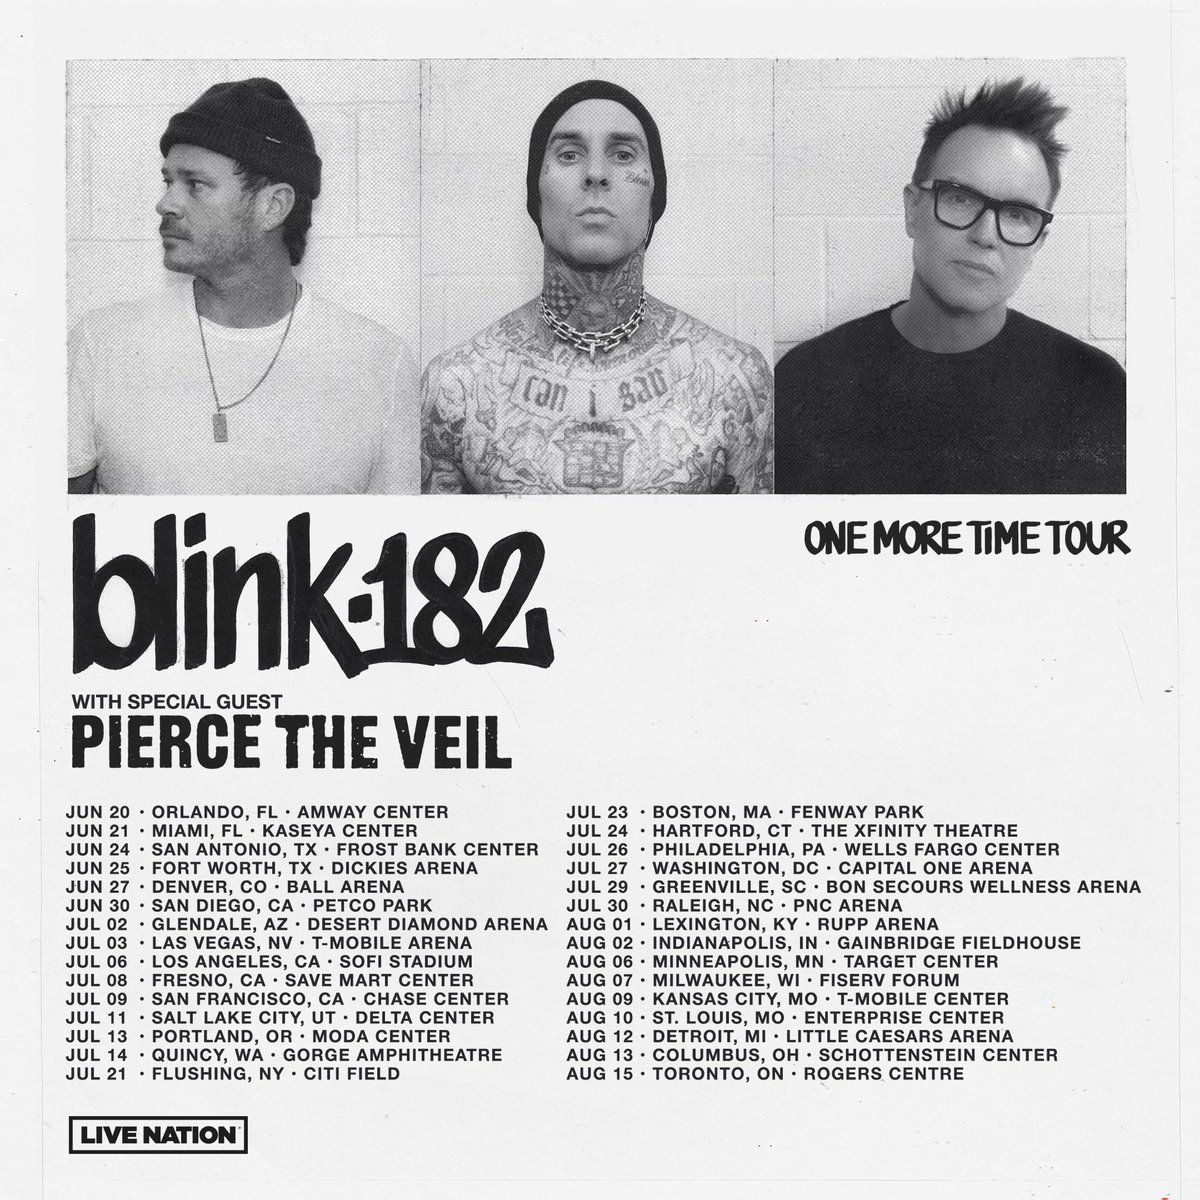 blink-182 with Pierce the Veil